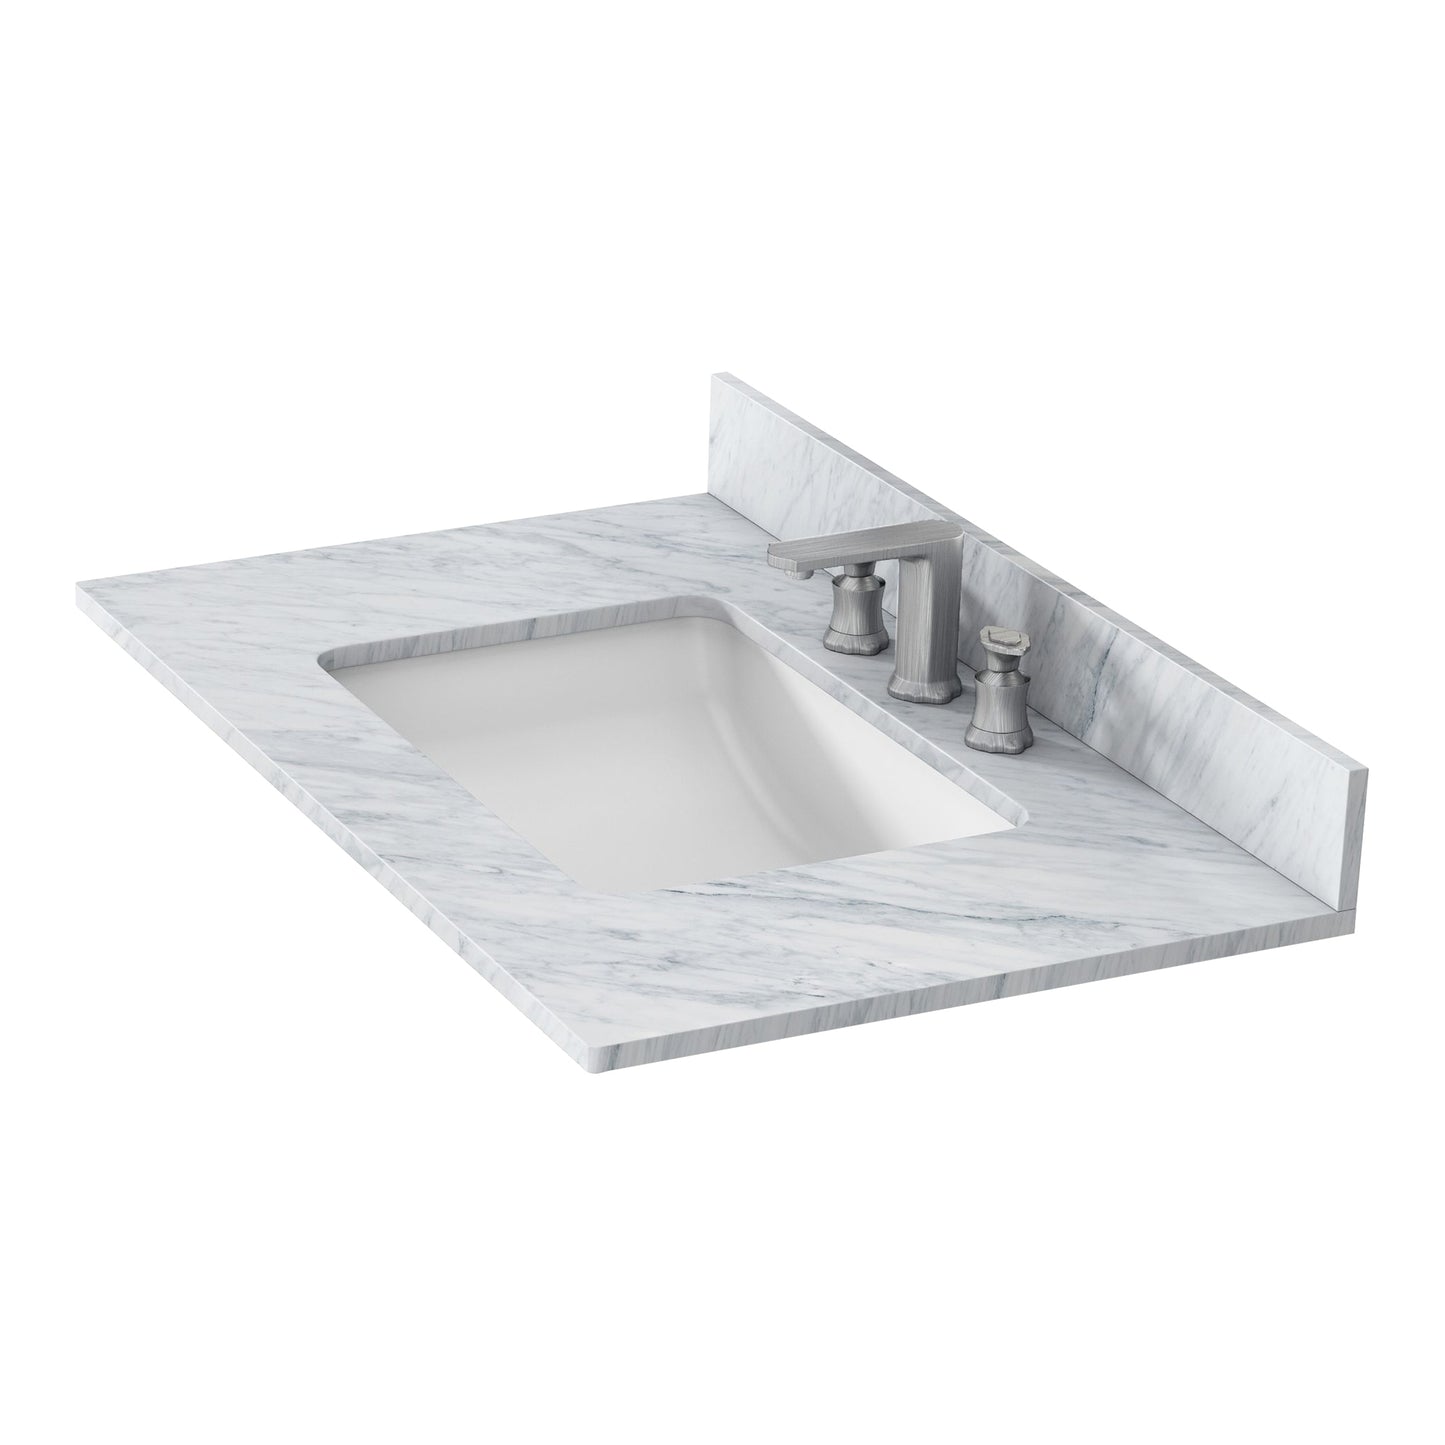 Bathroom Vanity Top37 "x 22" natural stone   Carrara white natural marble, CUPC ceramic sink and three-hole faucet hole with backsplash